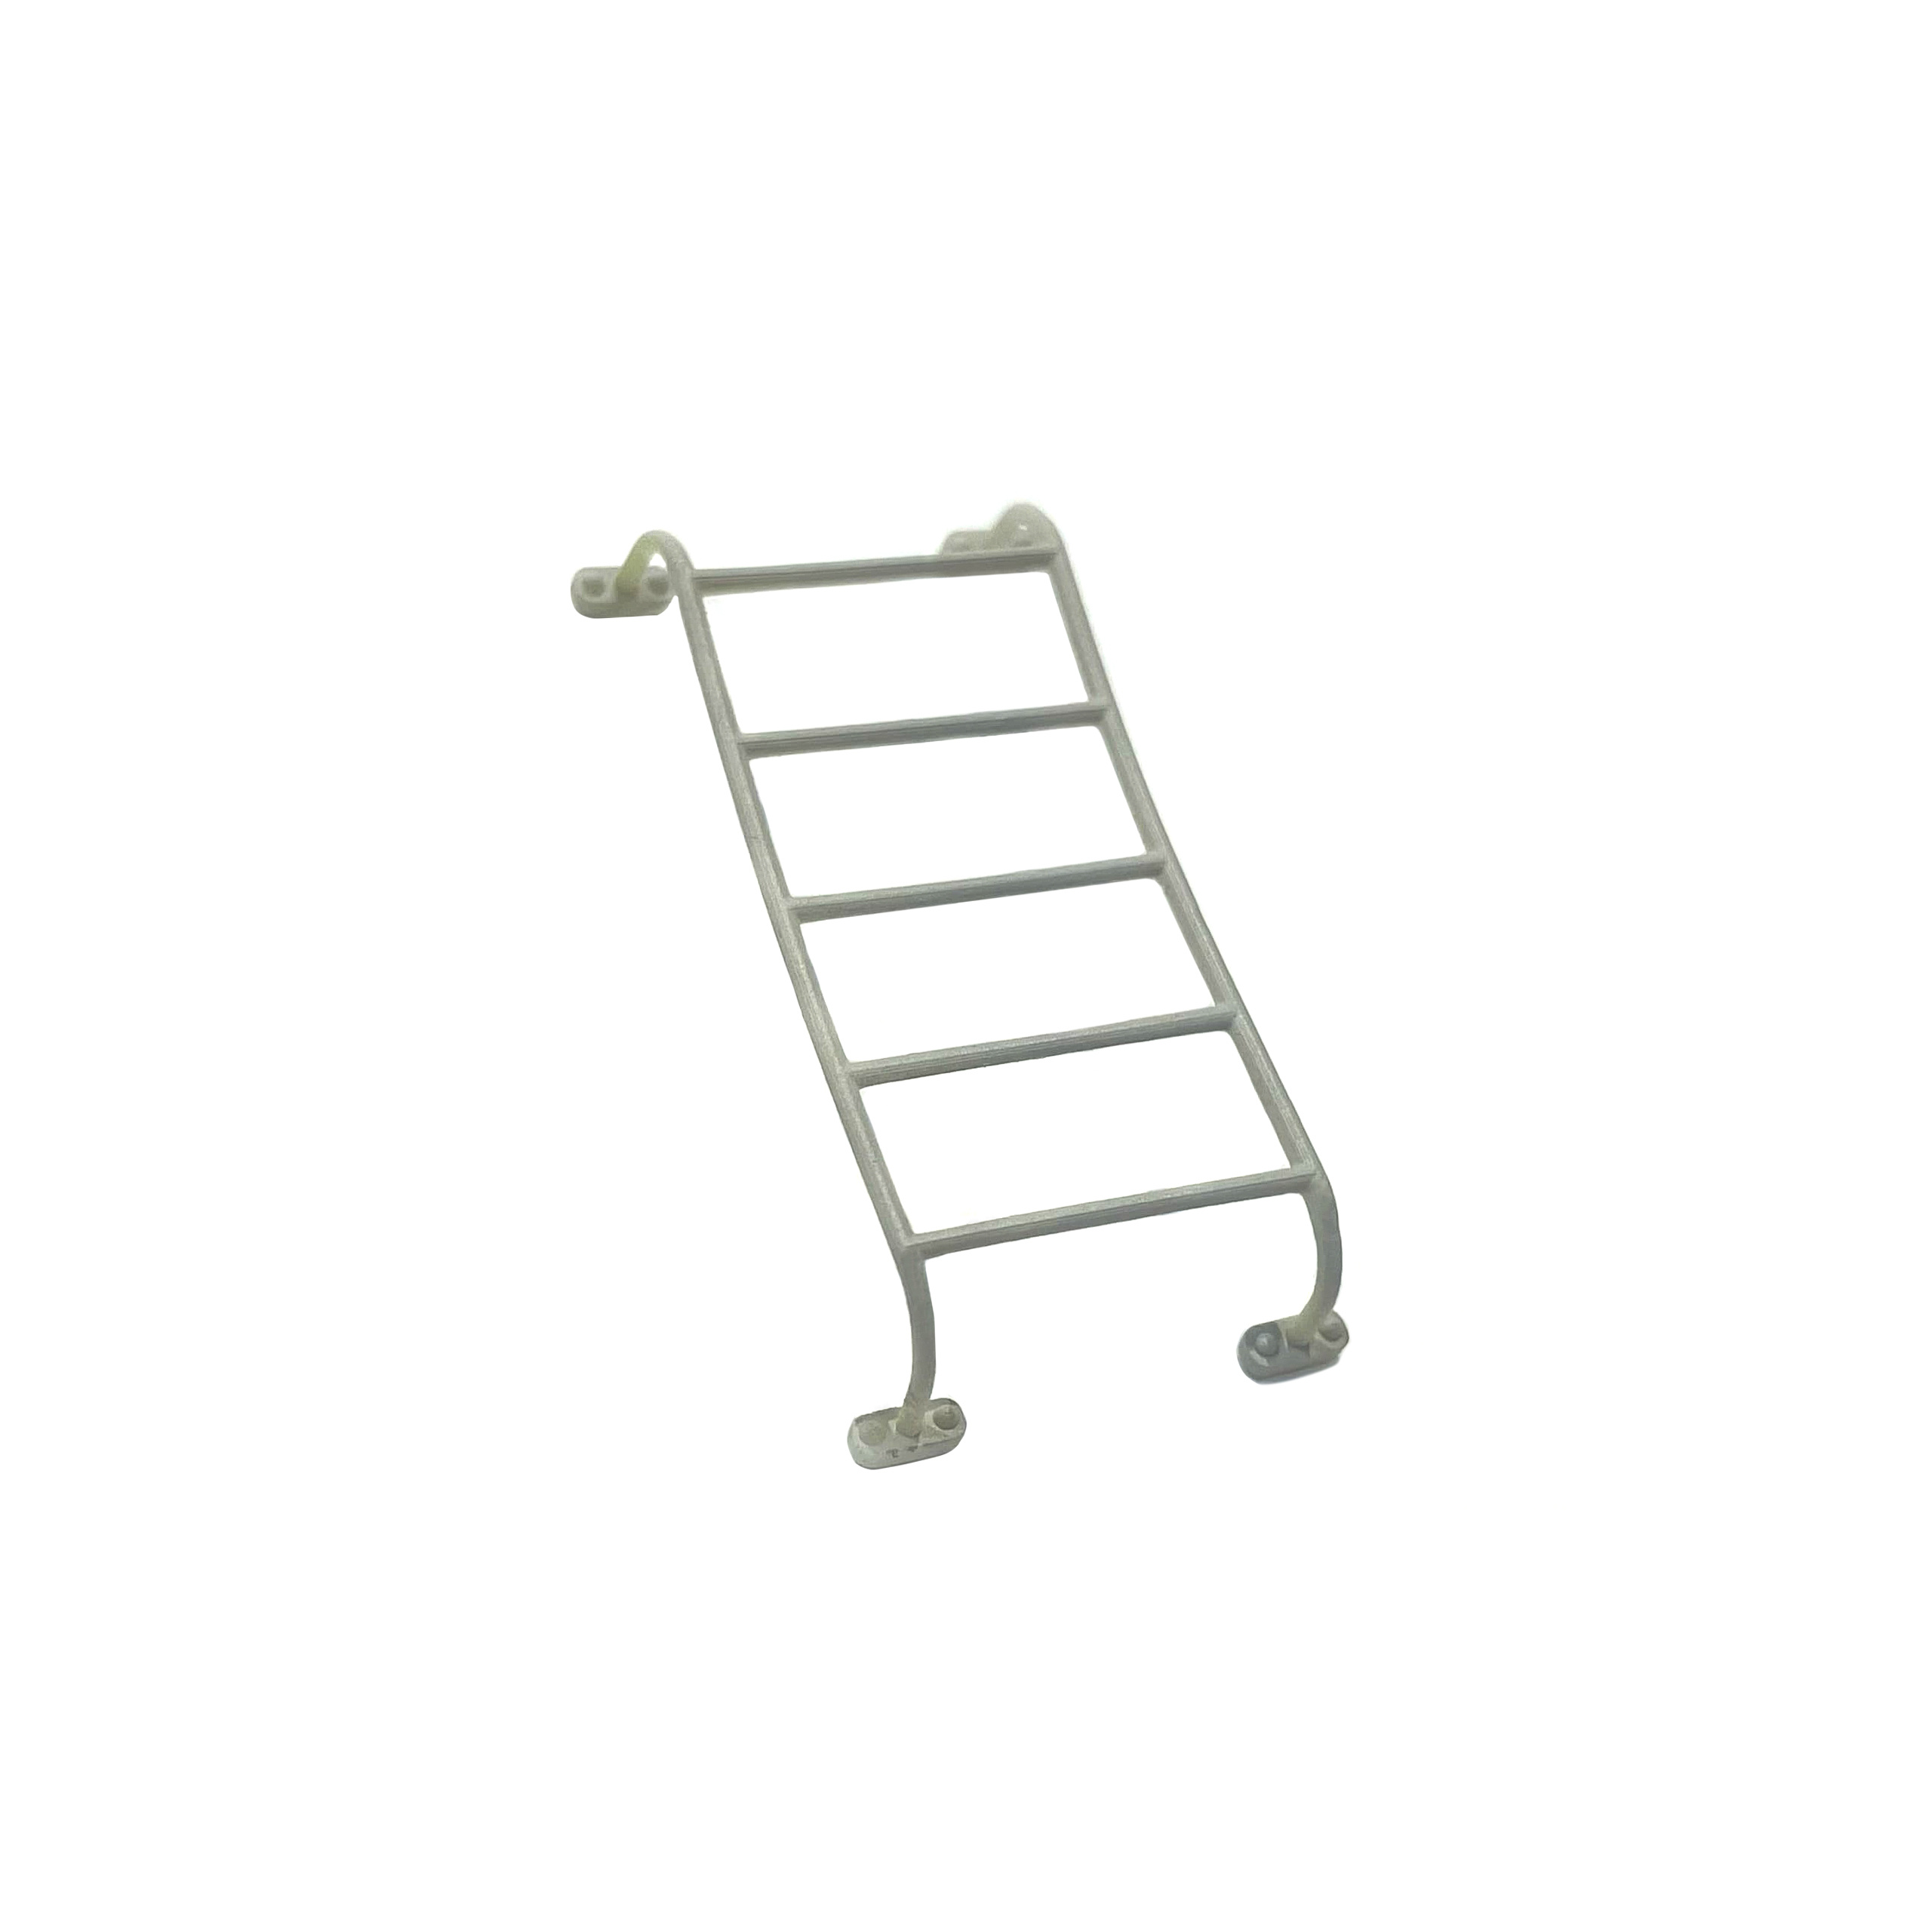 Im35051 Imodelist 1/35 Ladder for 